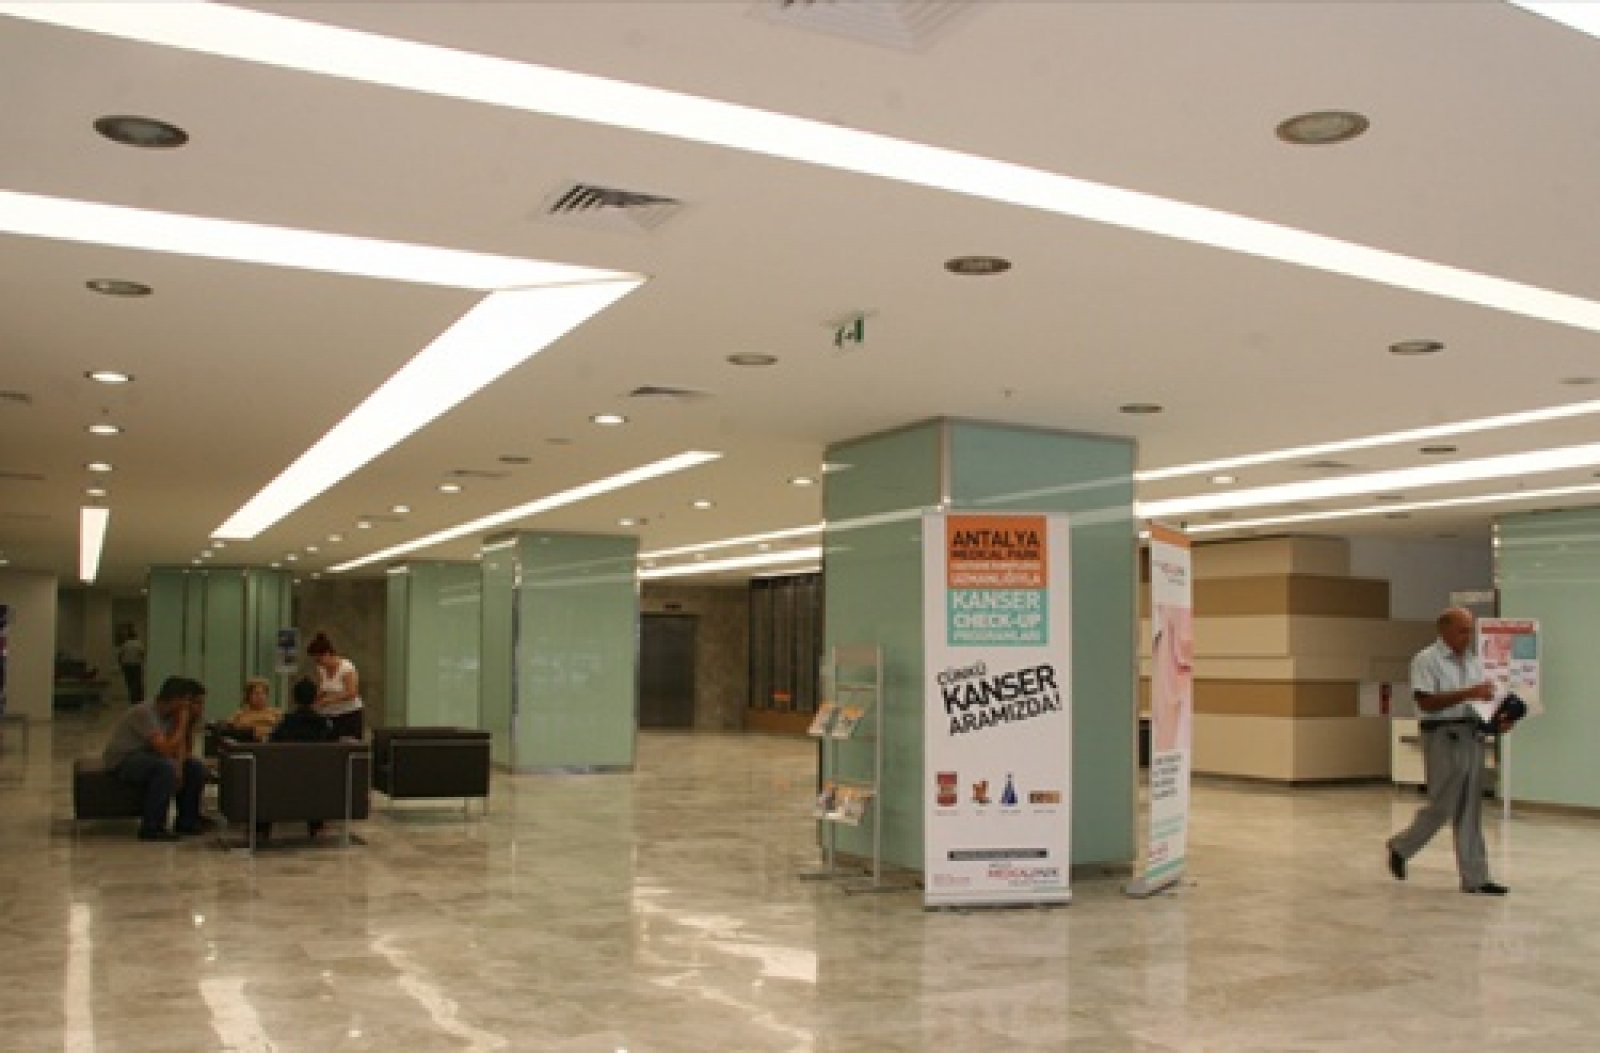 Antalya Medical Park Hastanesi